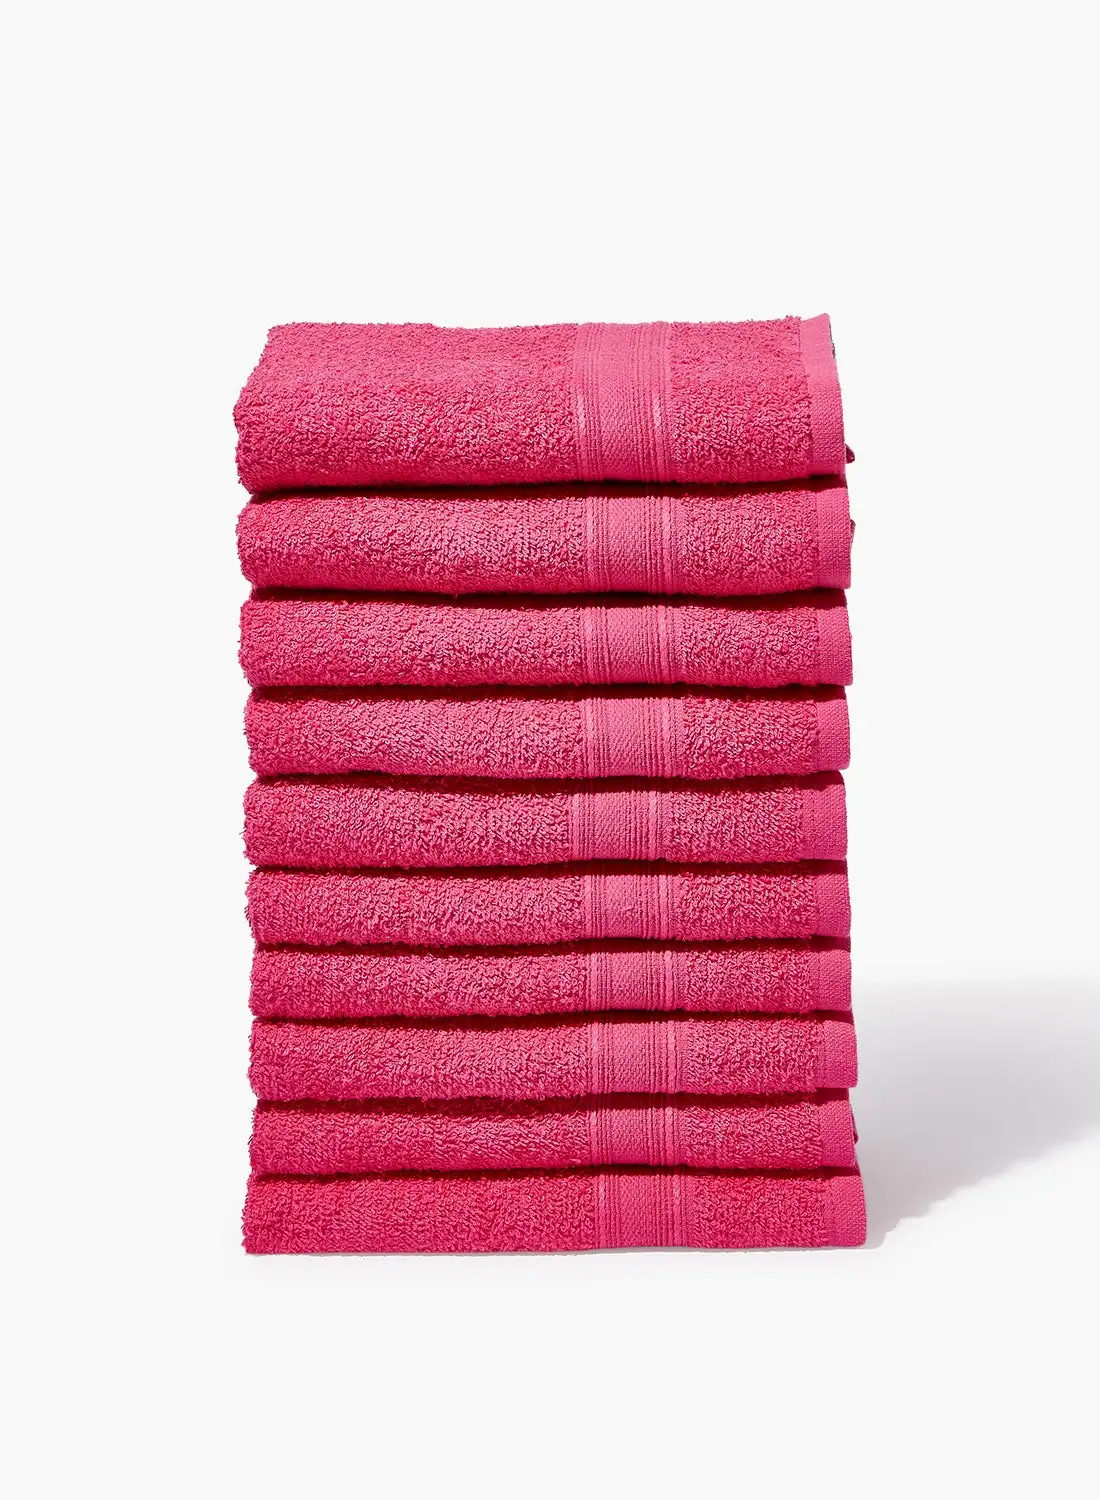 Amal 10 Piece Bathroom Towel Set - 400 GSM 100% Cotton Terry - 10 Face Towel - Fuchsia Color -Quick Dry - Super Absorbent